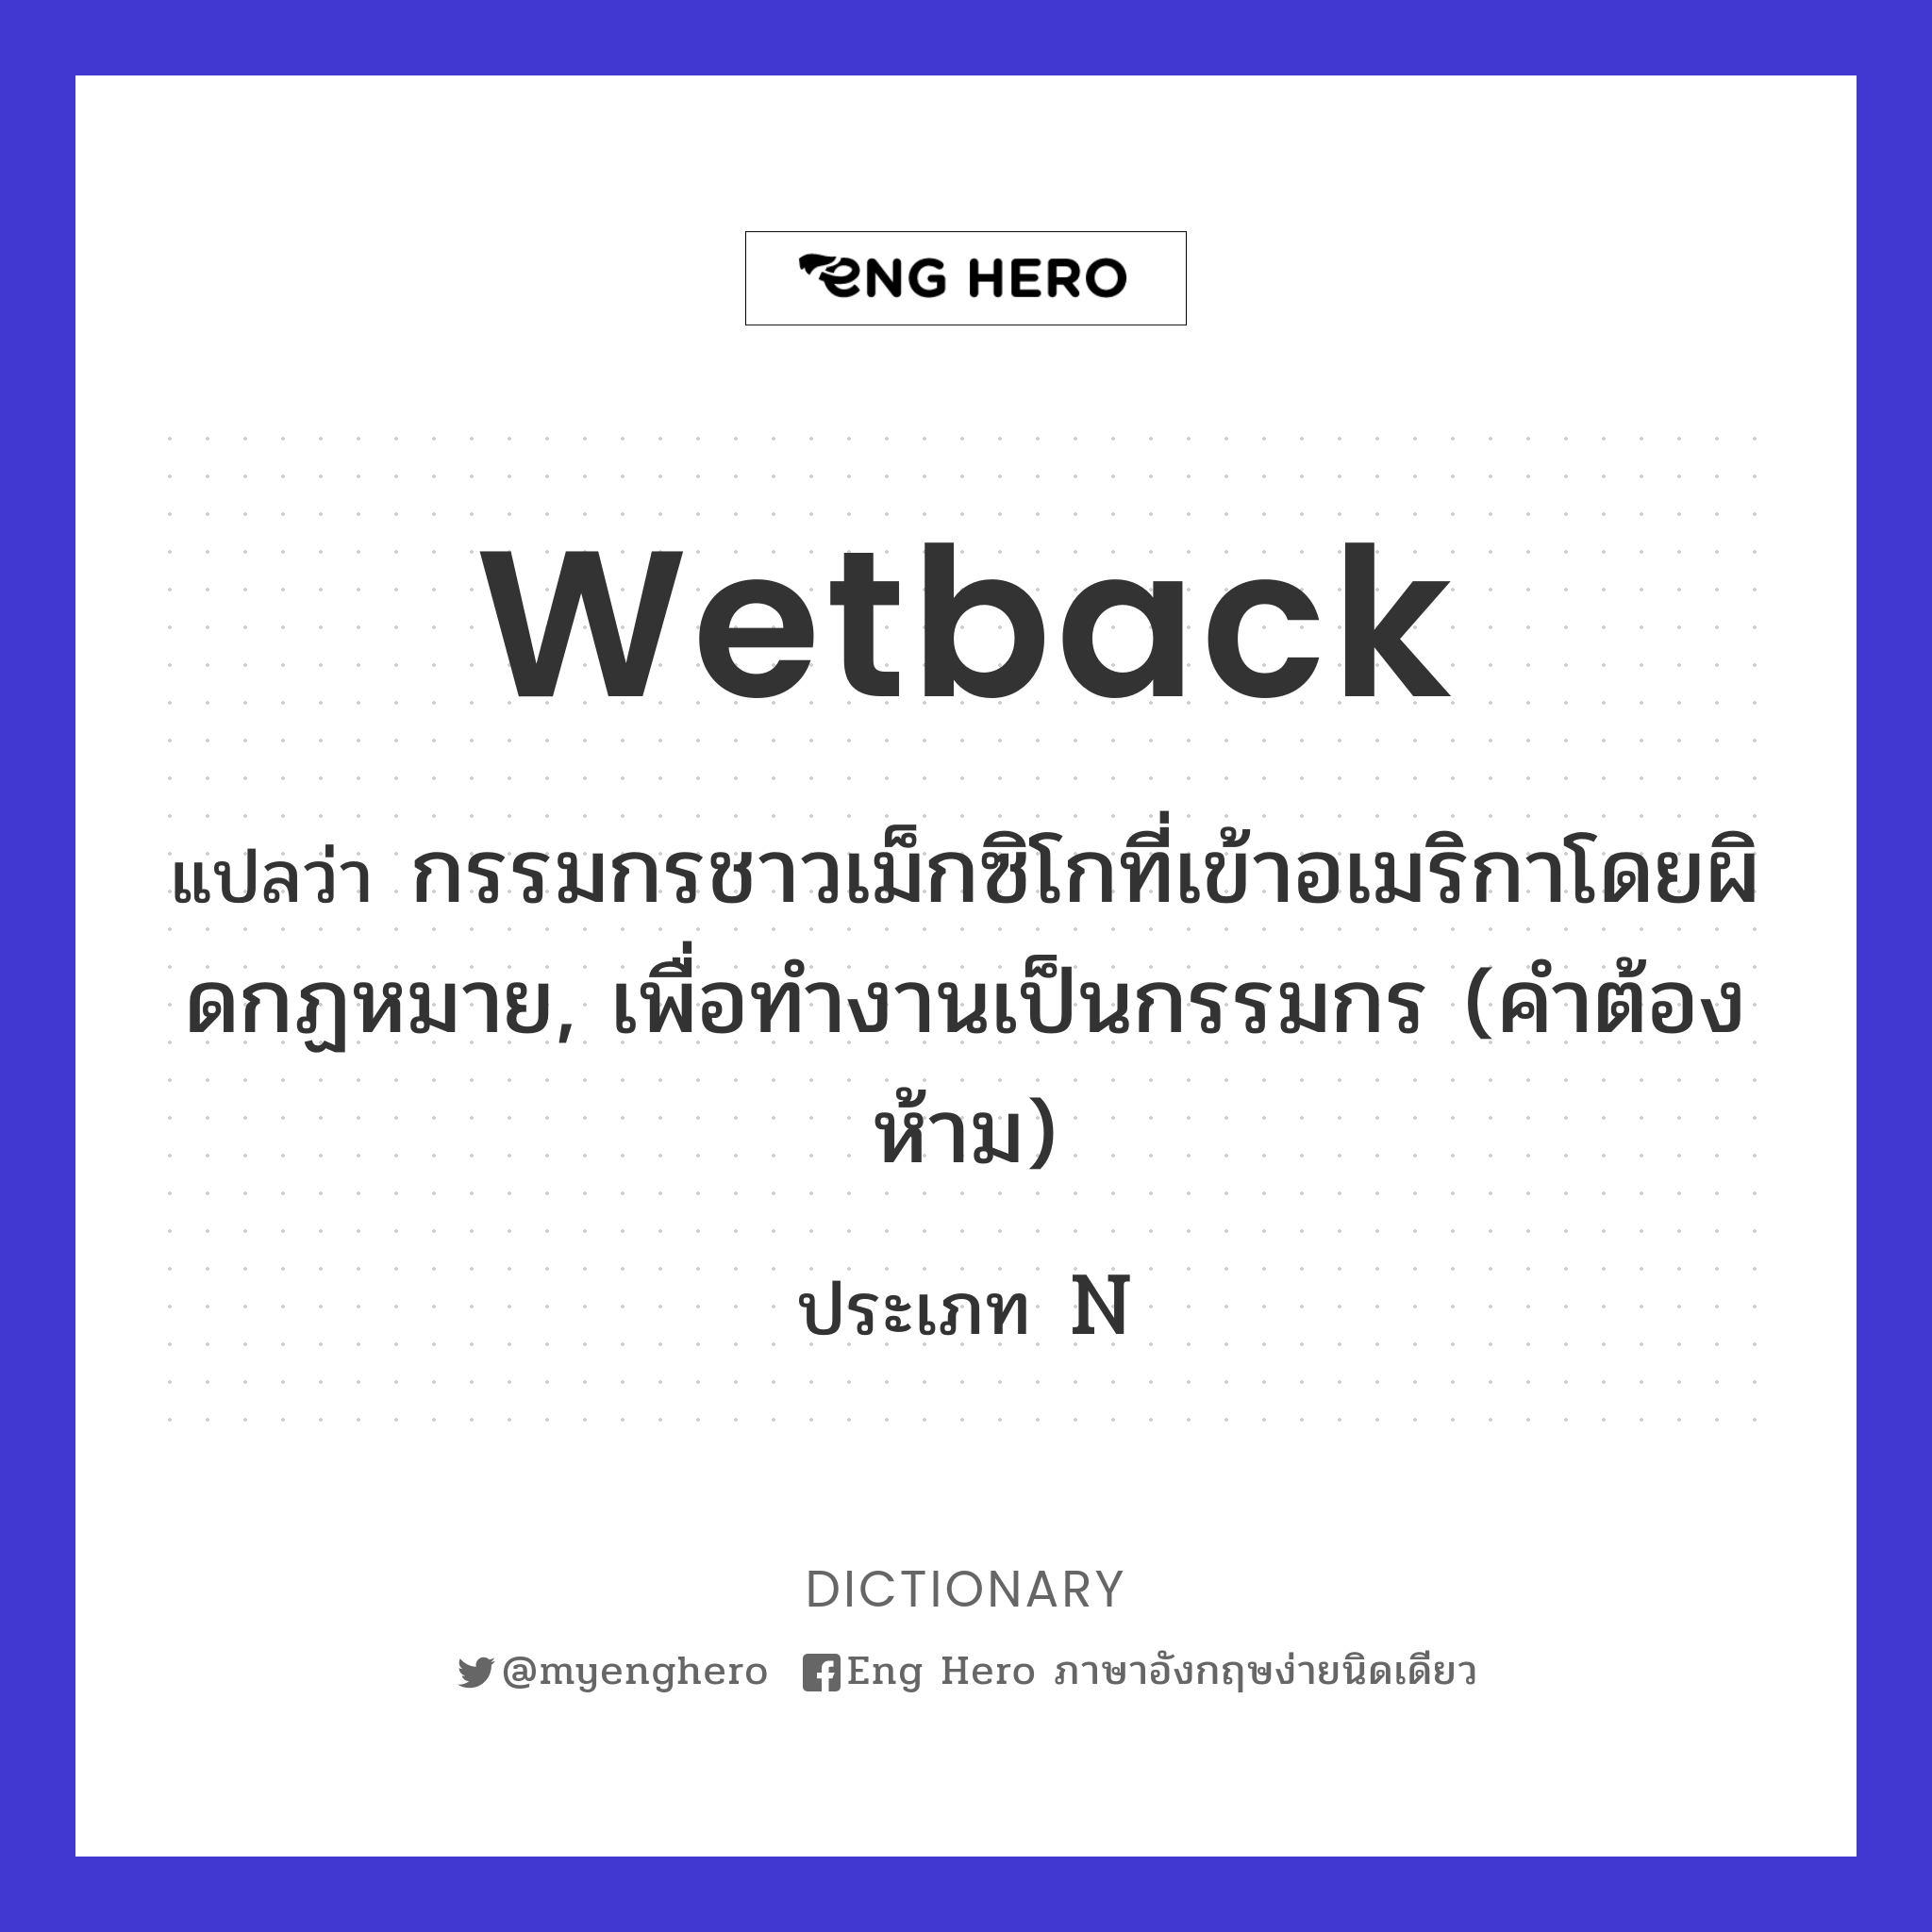 wetback